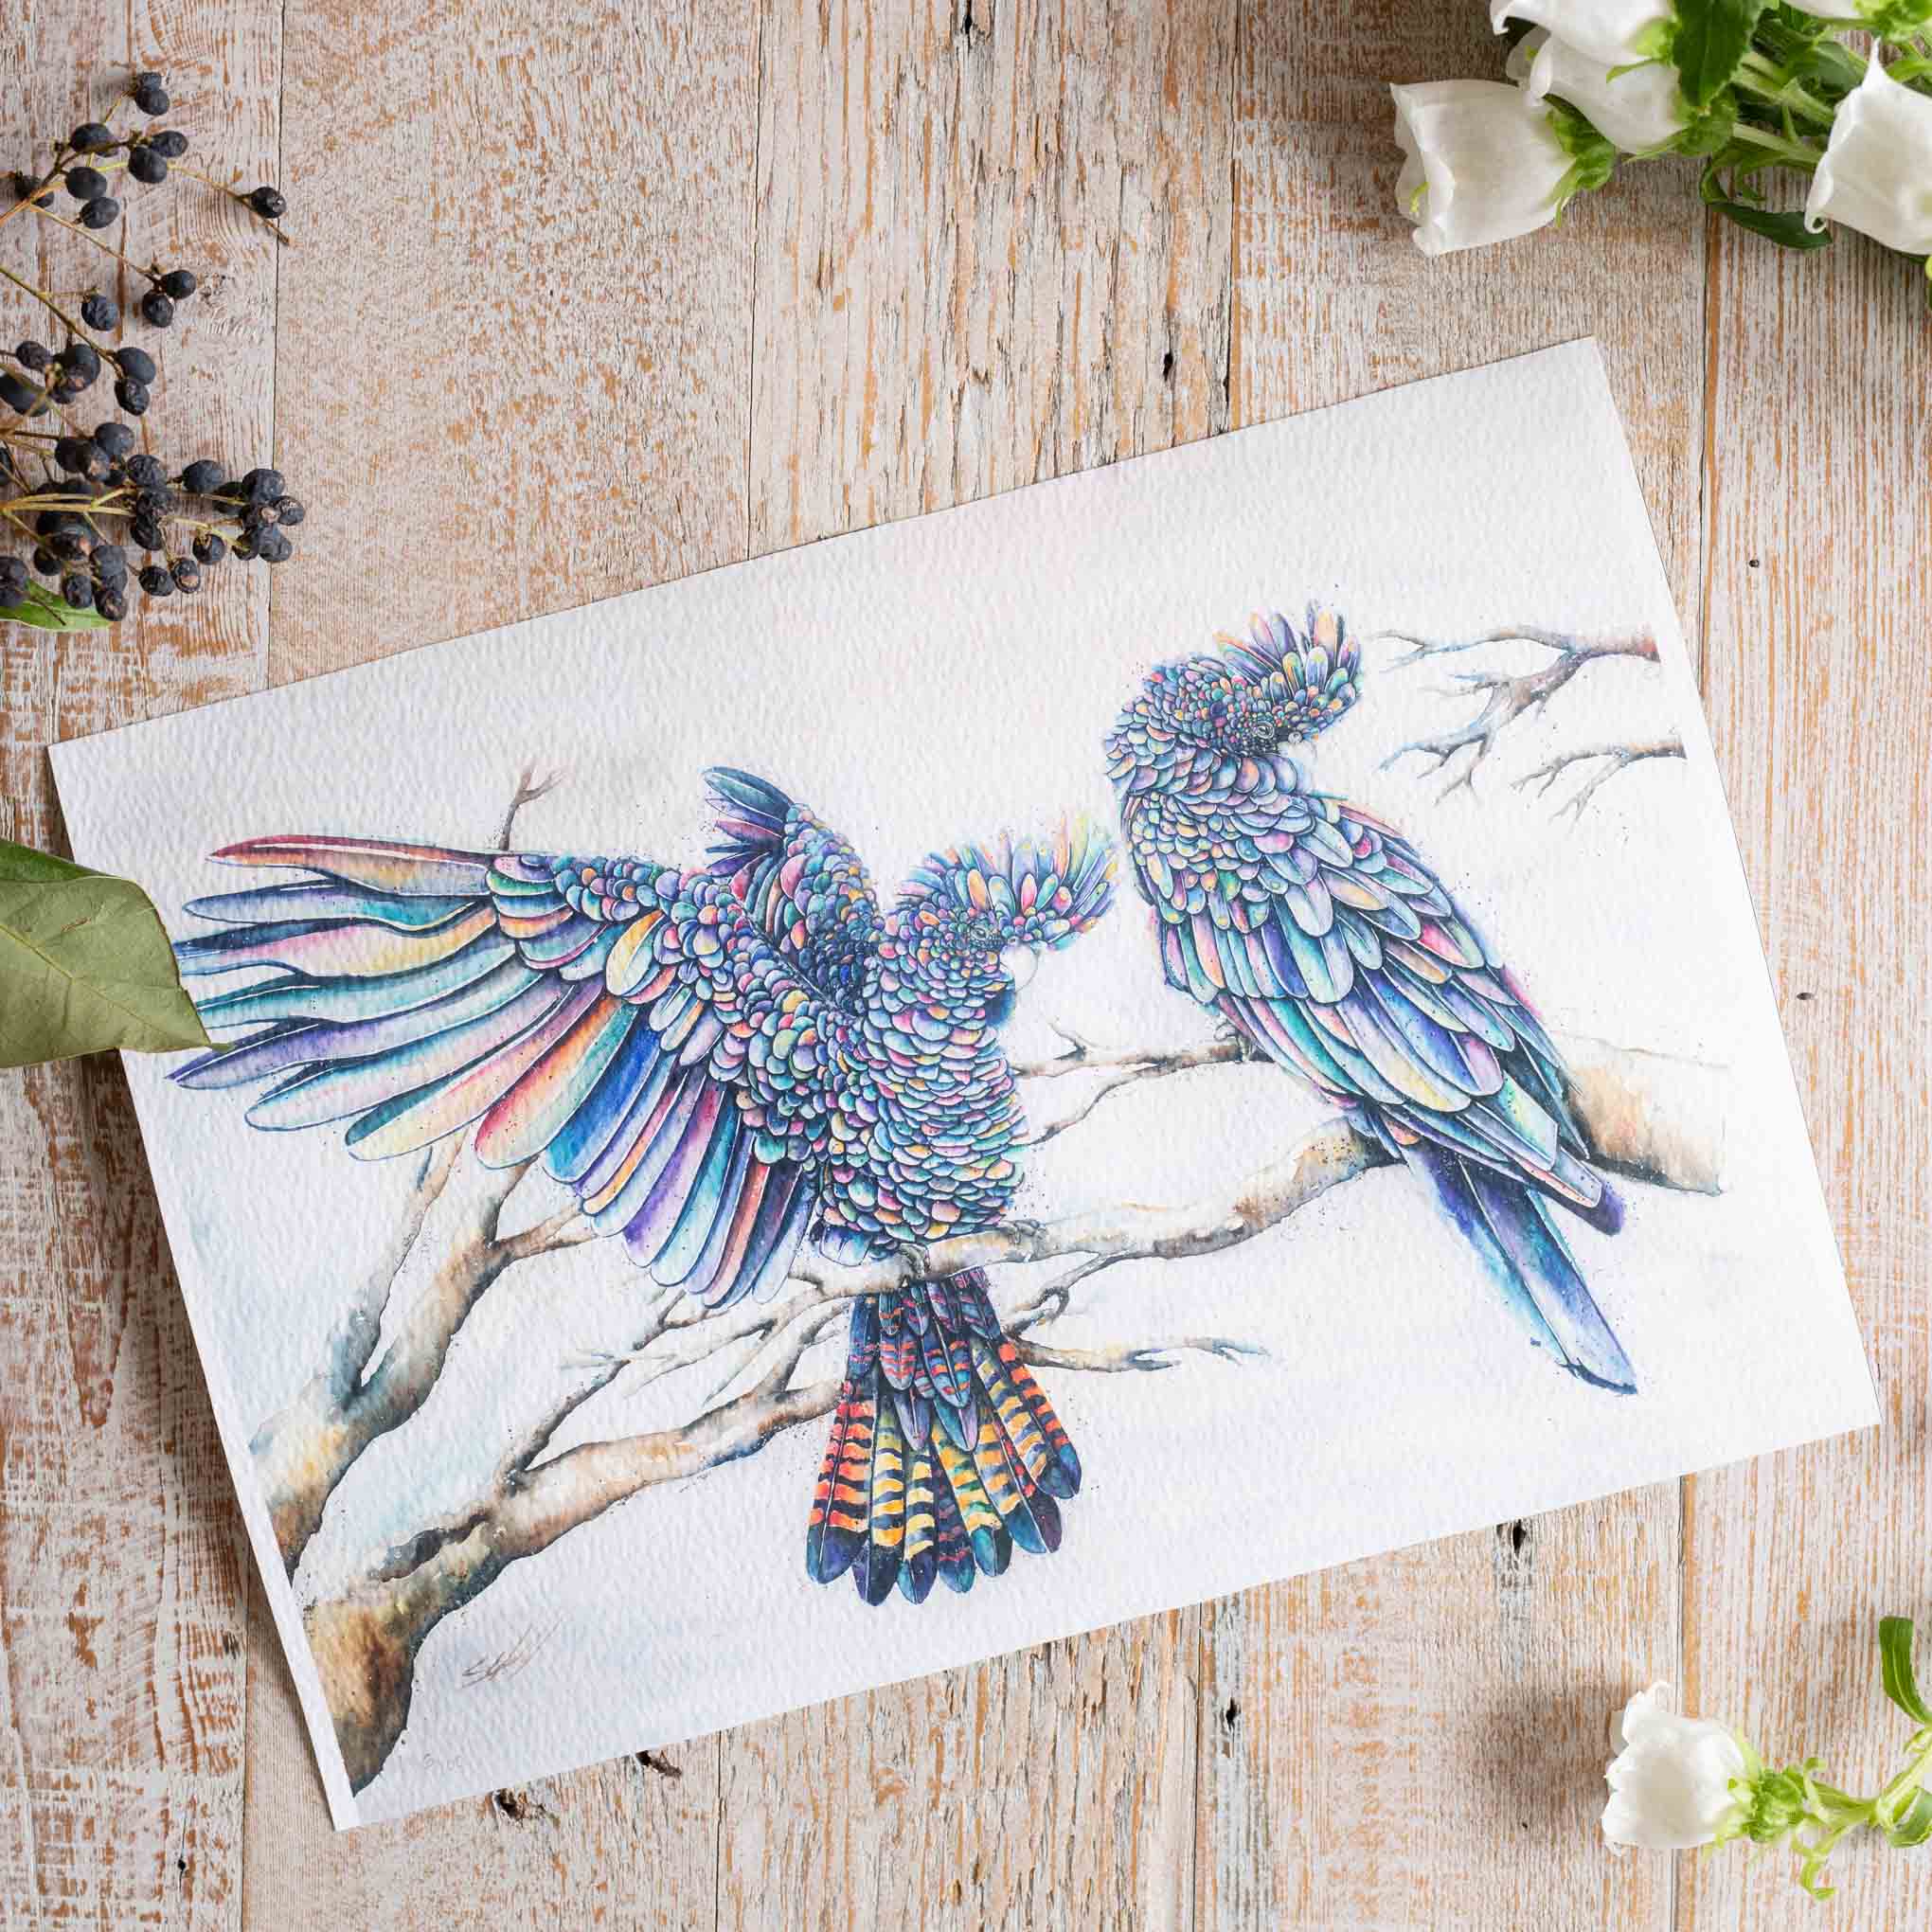 Watercolour animals artwork black cockatoos print